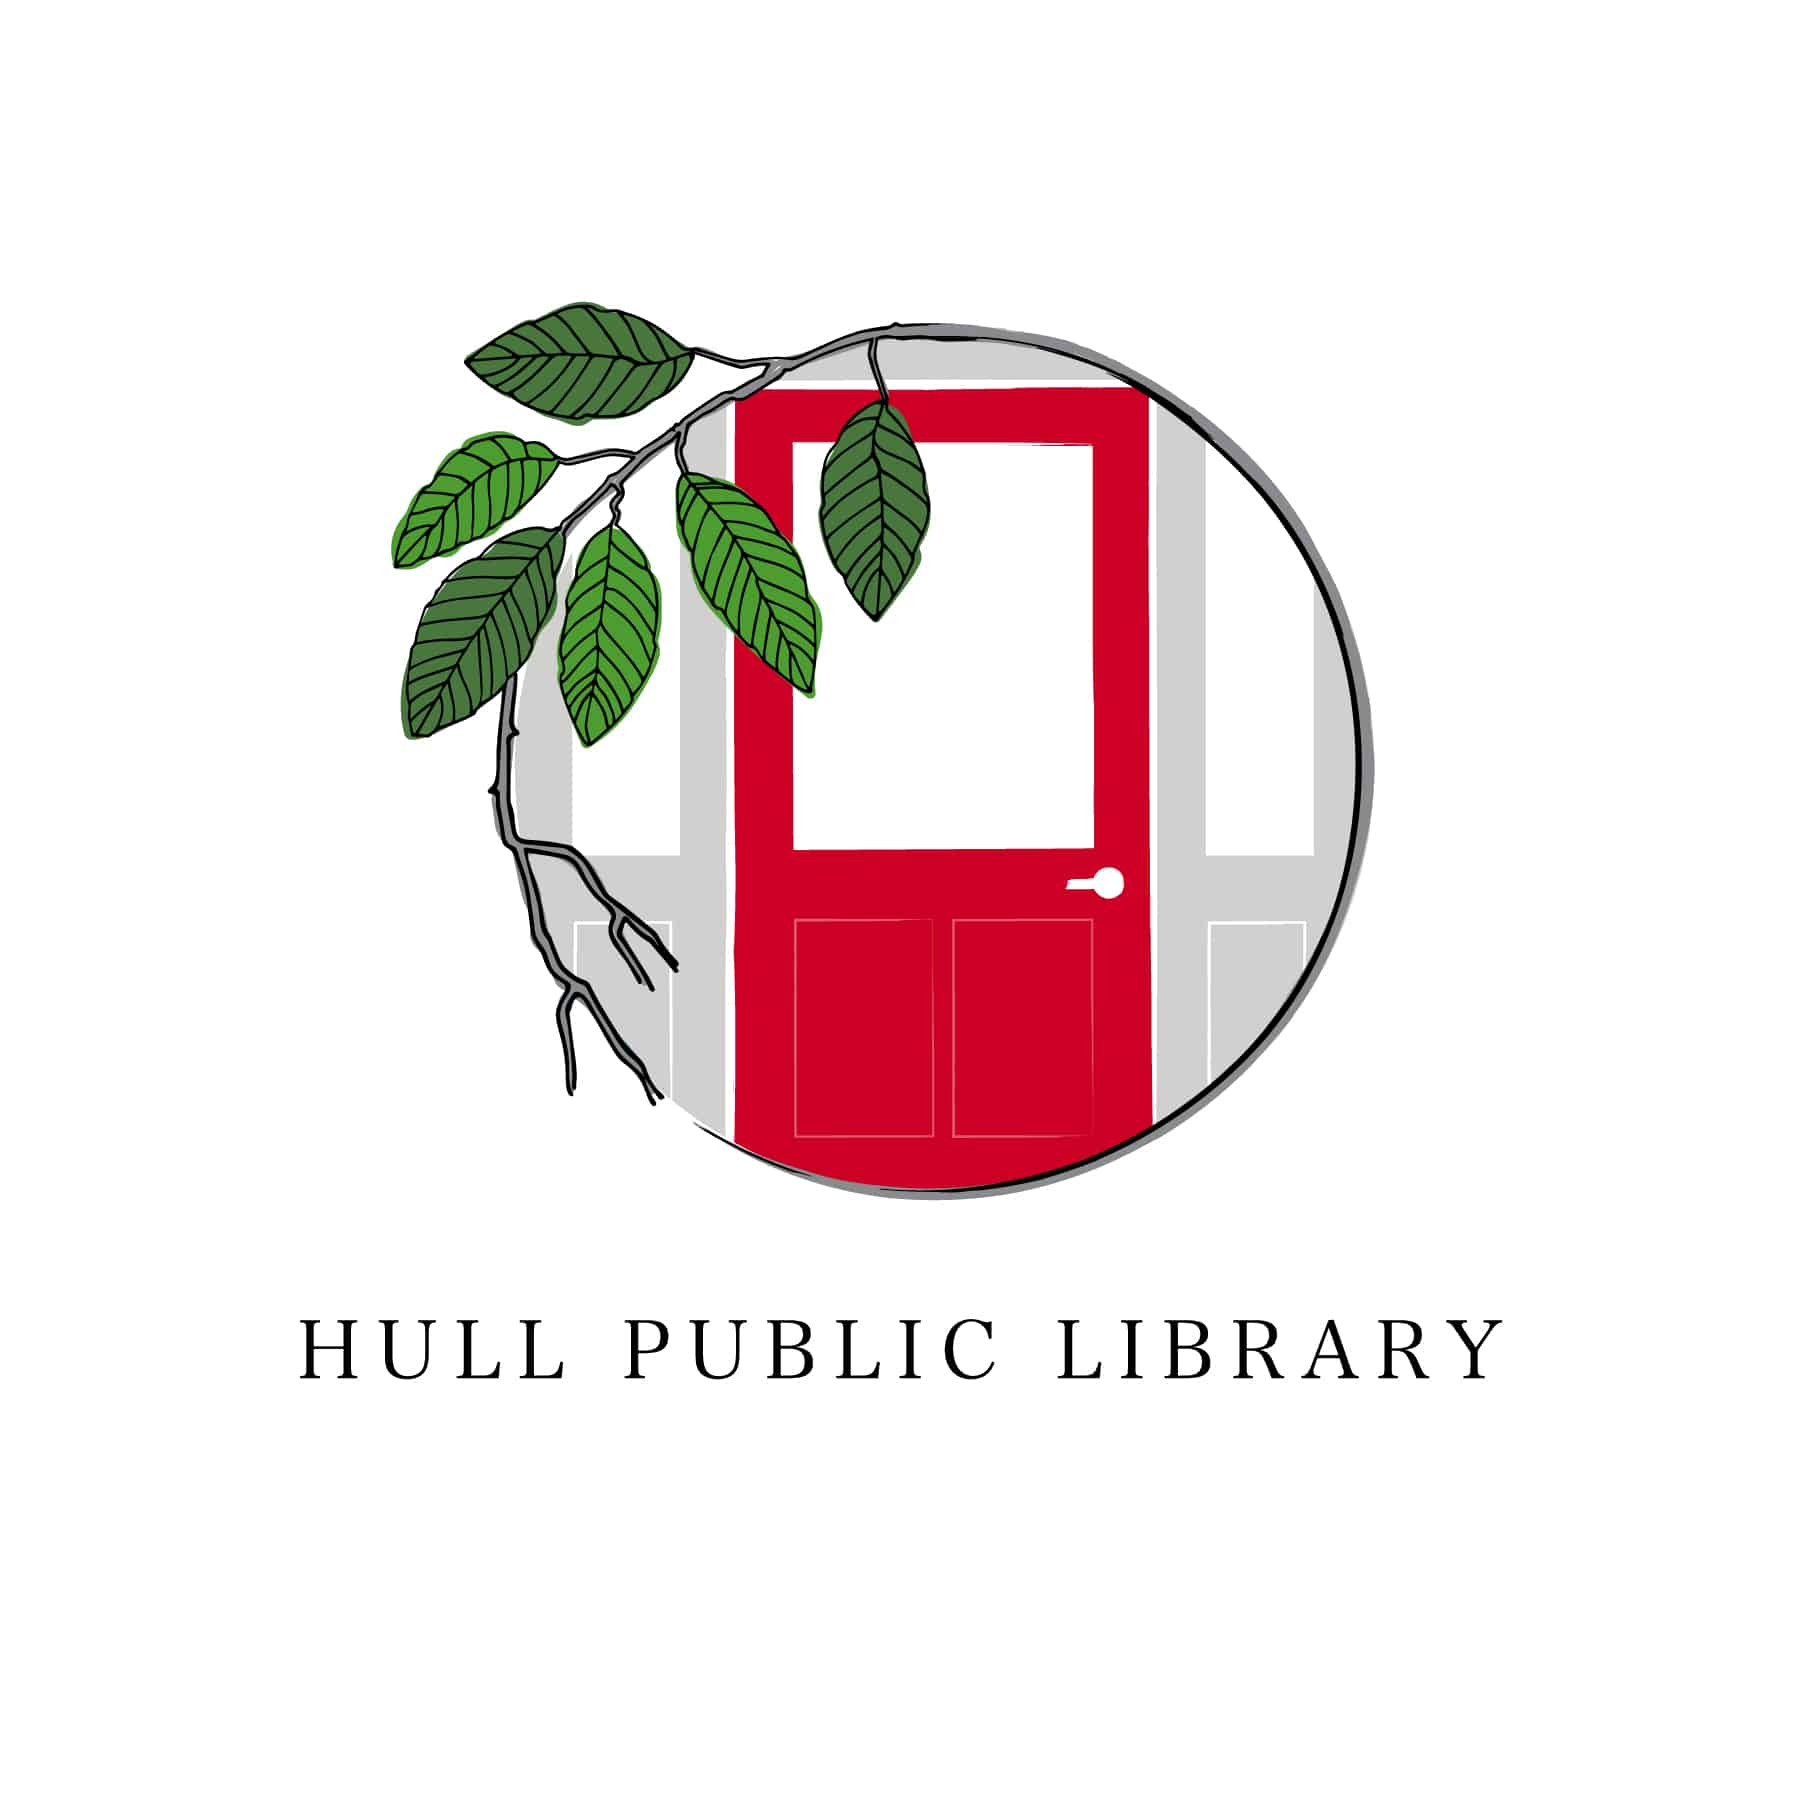 Hull Public Library logo